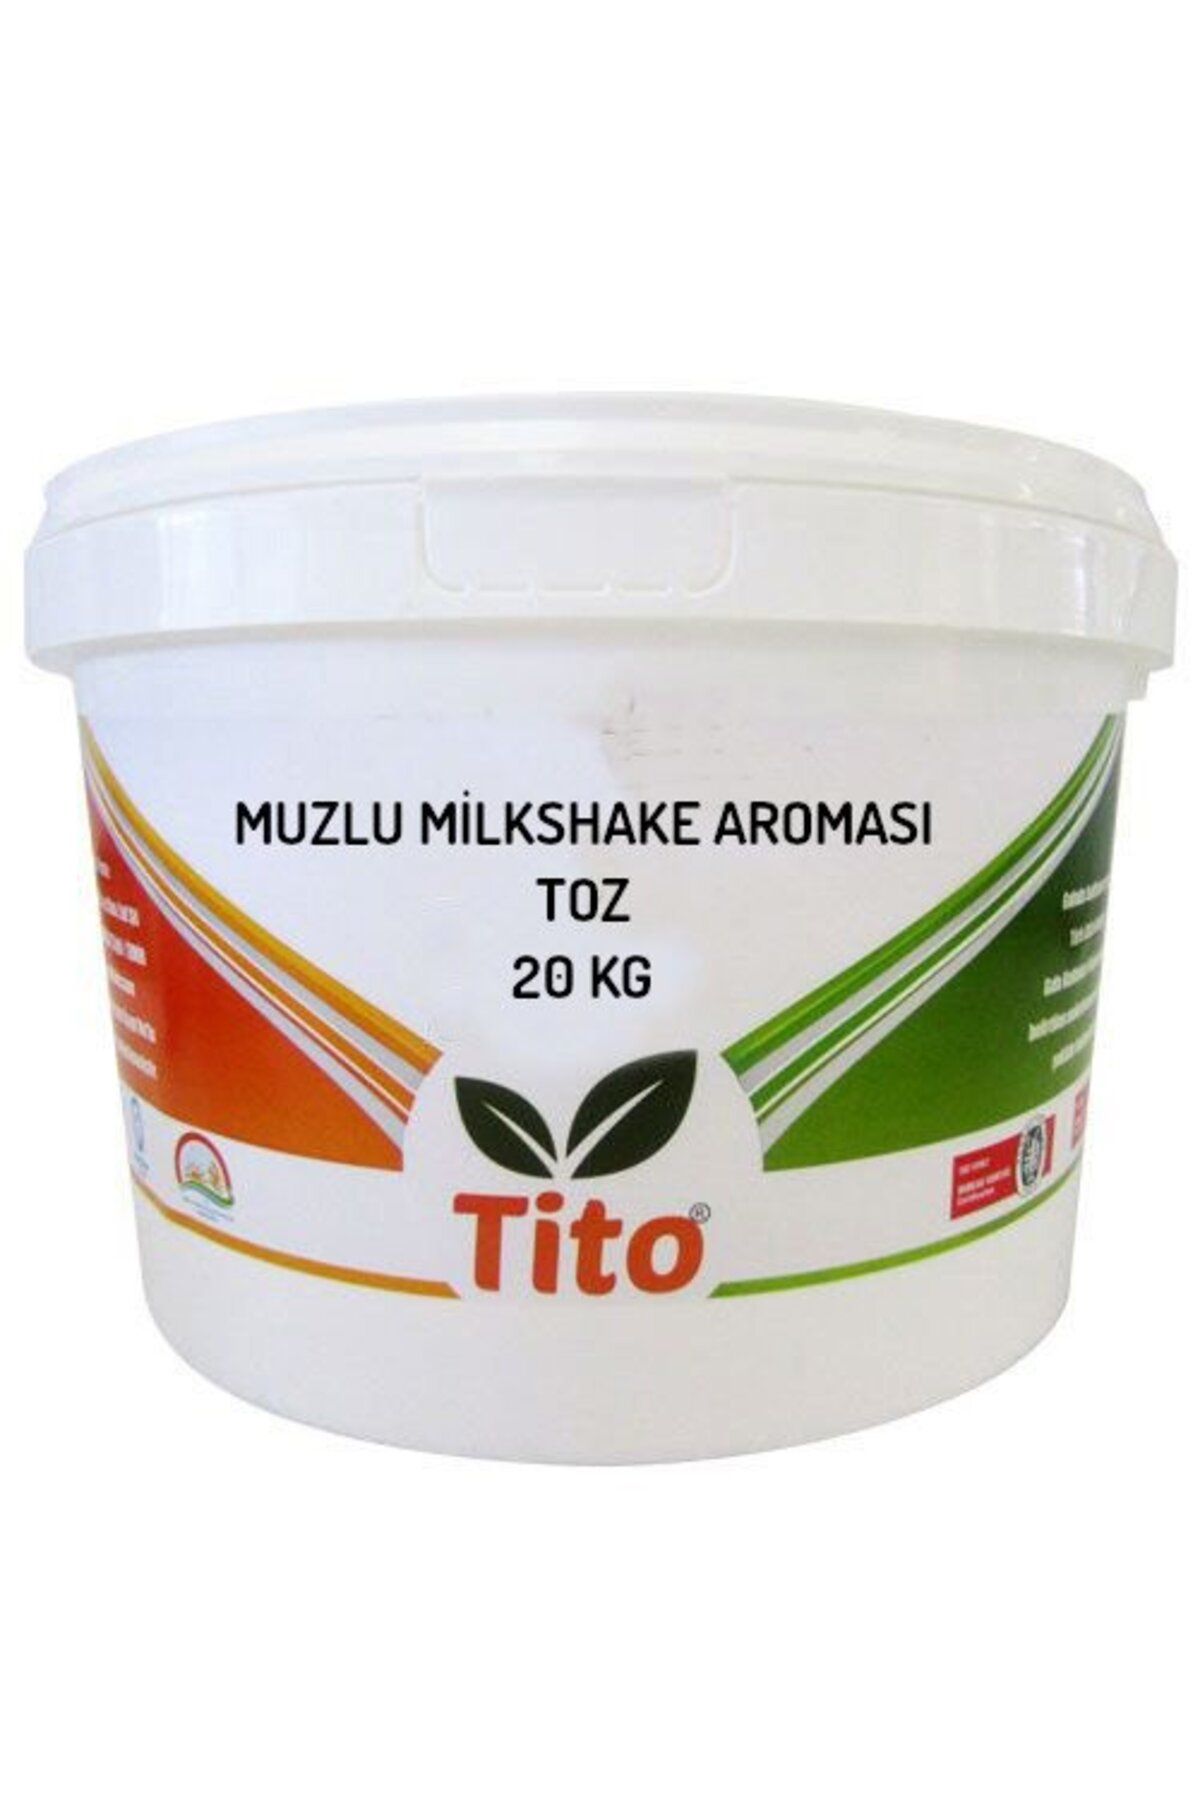 tito Toz Muzlu Milkshake Aroması 20 Kg